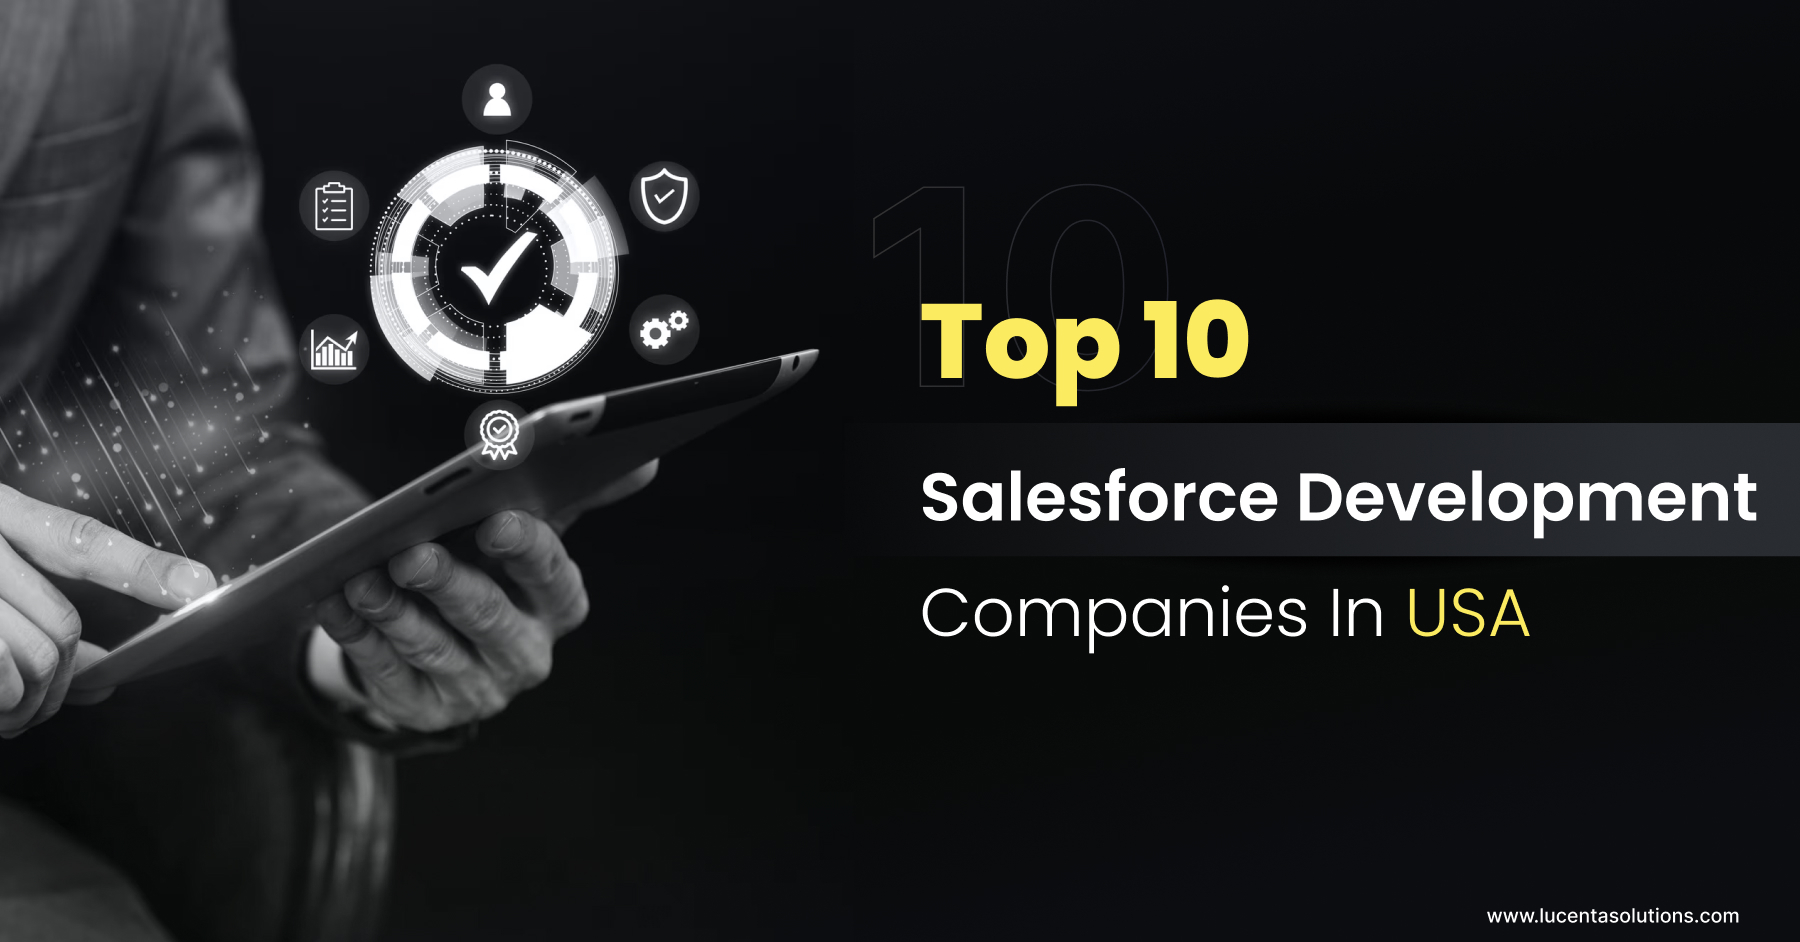 Top Salesforce Development Companies in USA